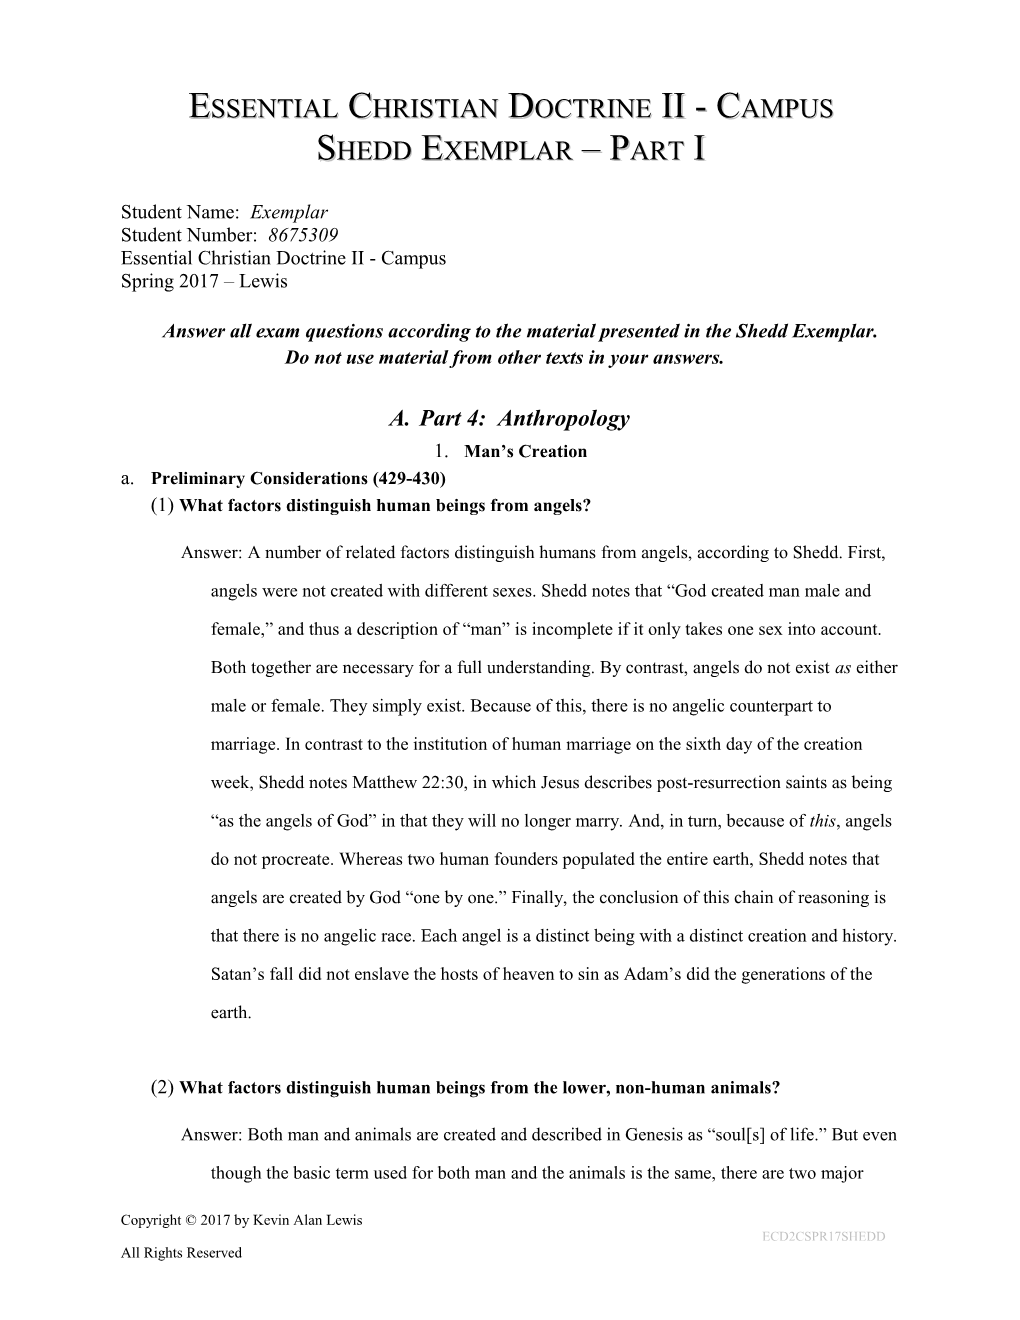 ECD II Campus Shedd Report Exemplar Page 2